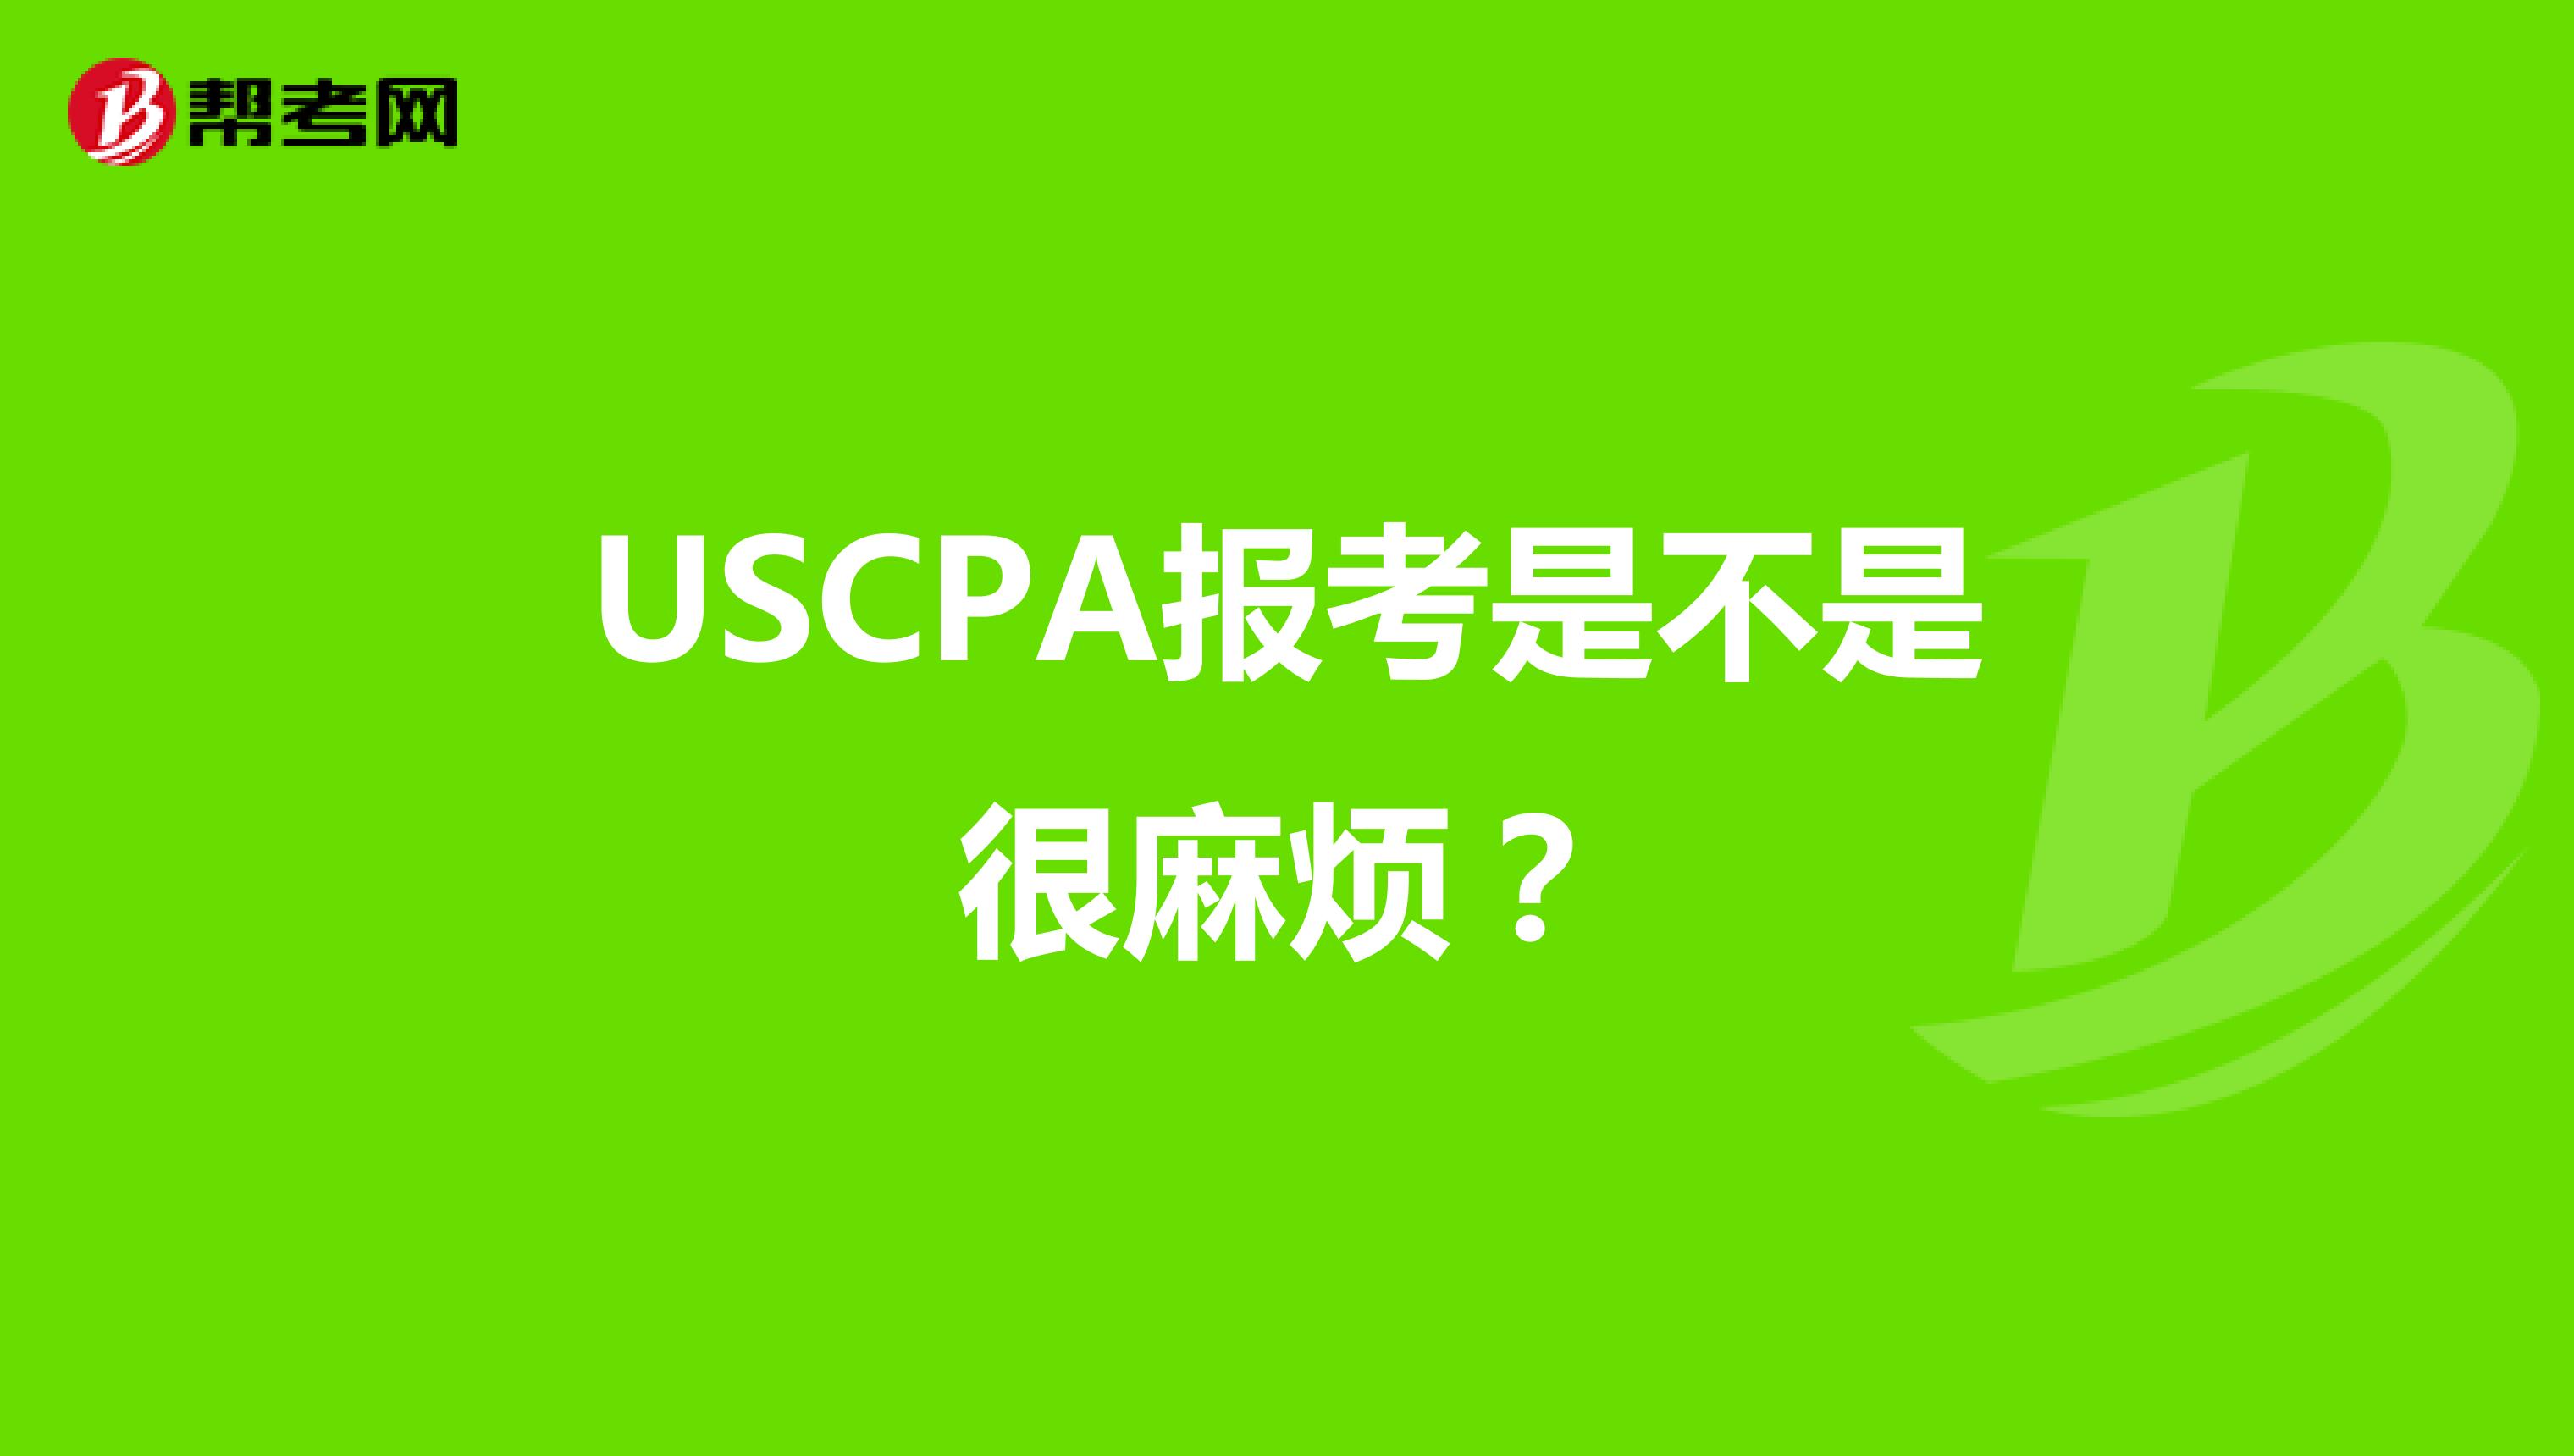 USCPA报考是不是很麻烦？